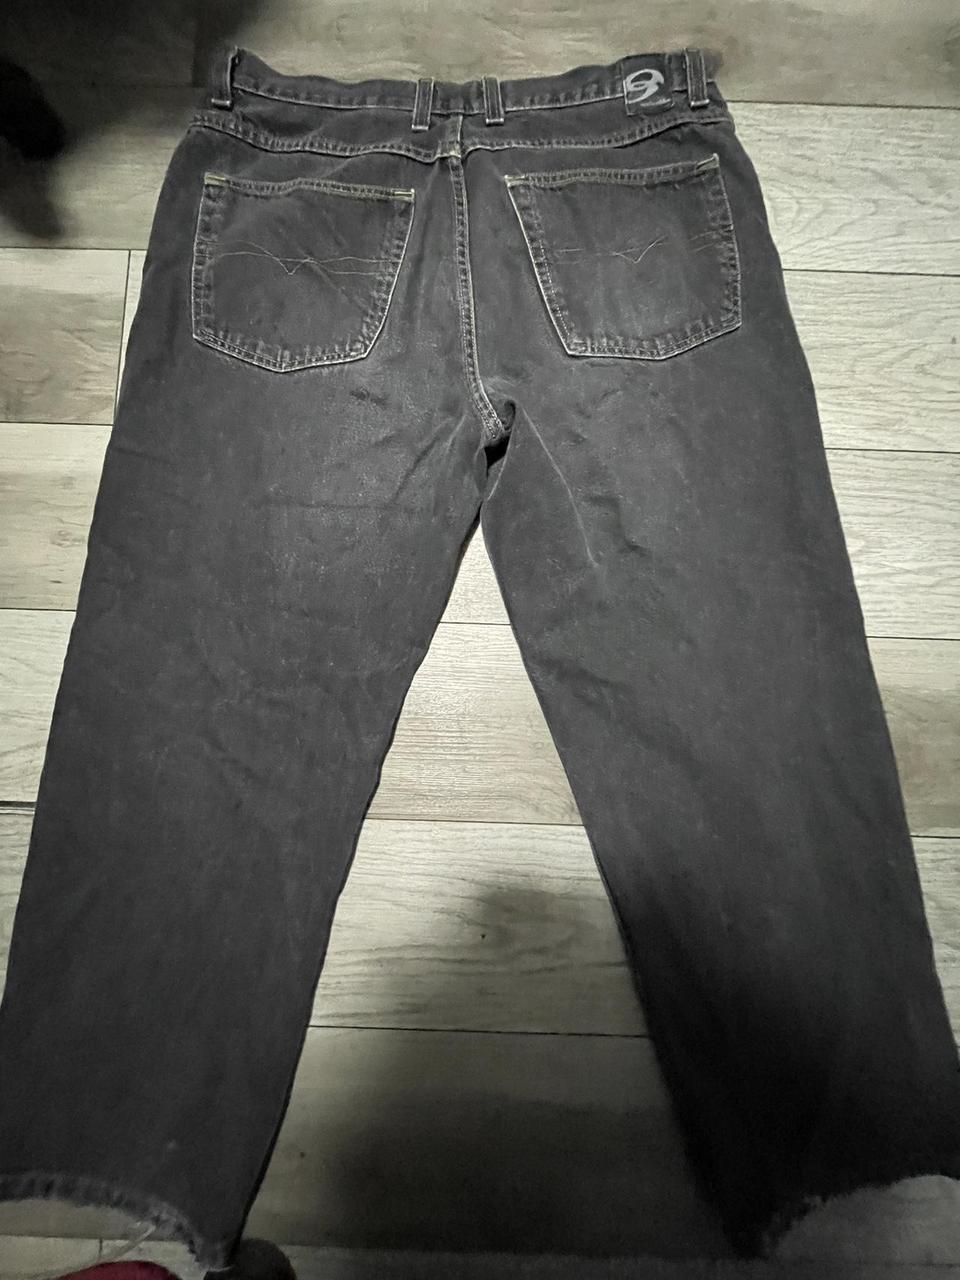 Anchor blue black baggy jeans some distressing 30$... - Depop